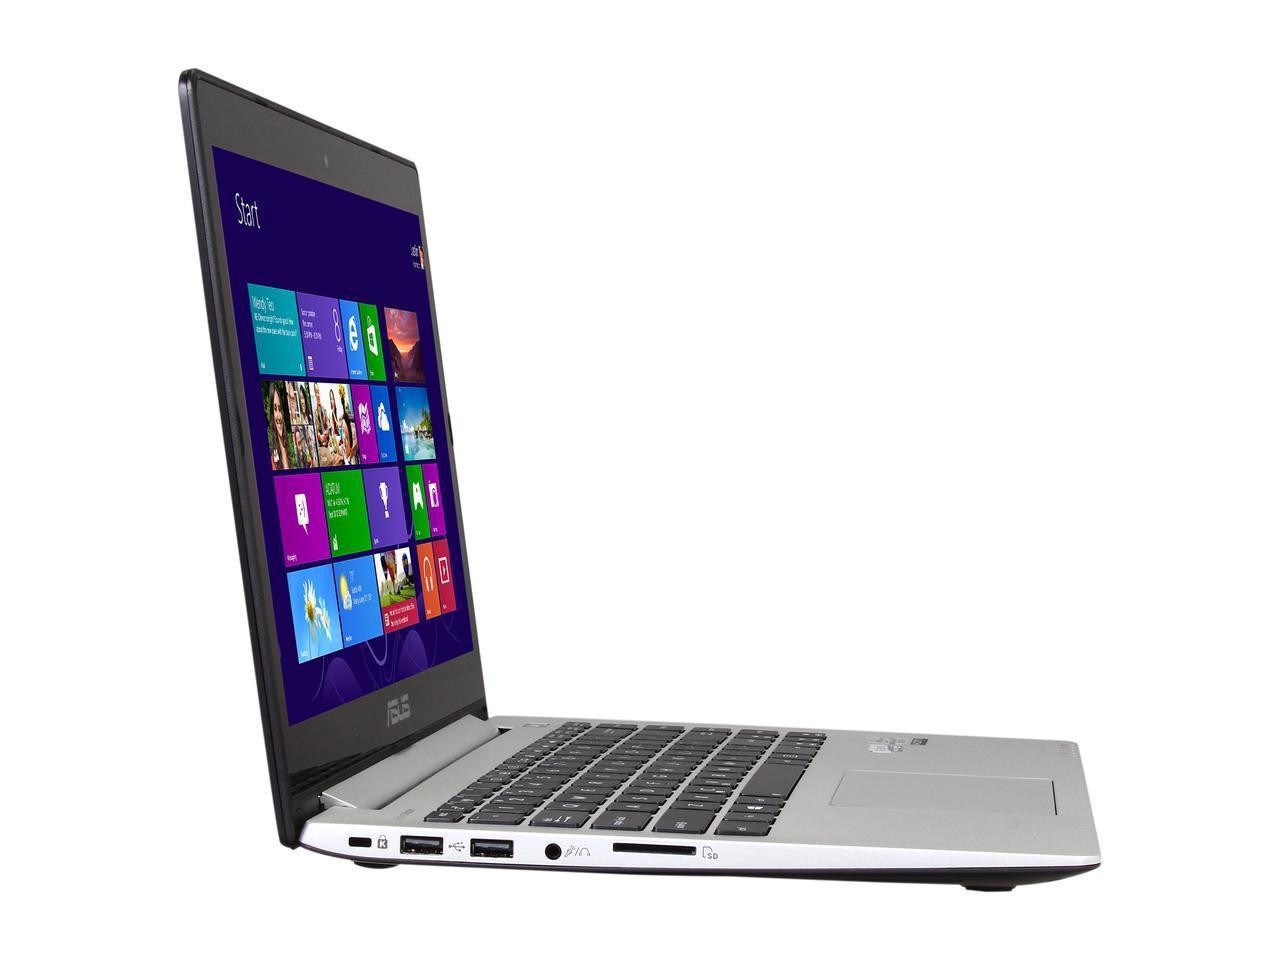 Asus S400C Core i5 Touchscreen Ultrabook Laptop